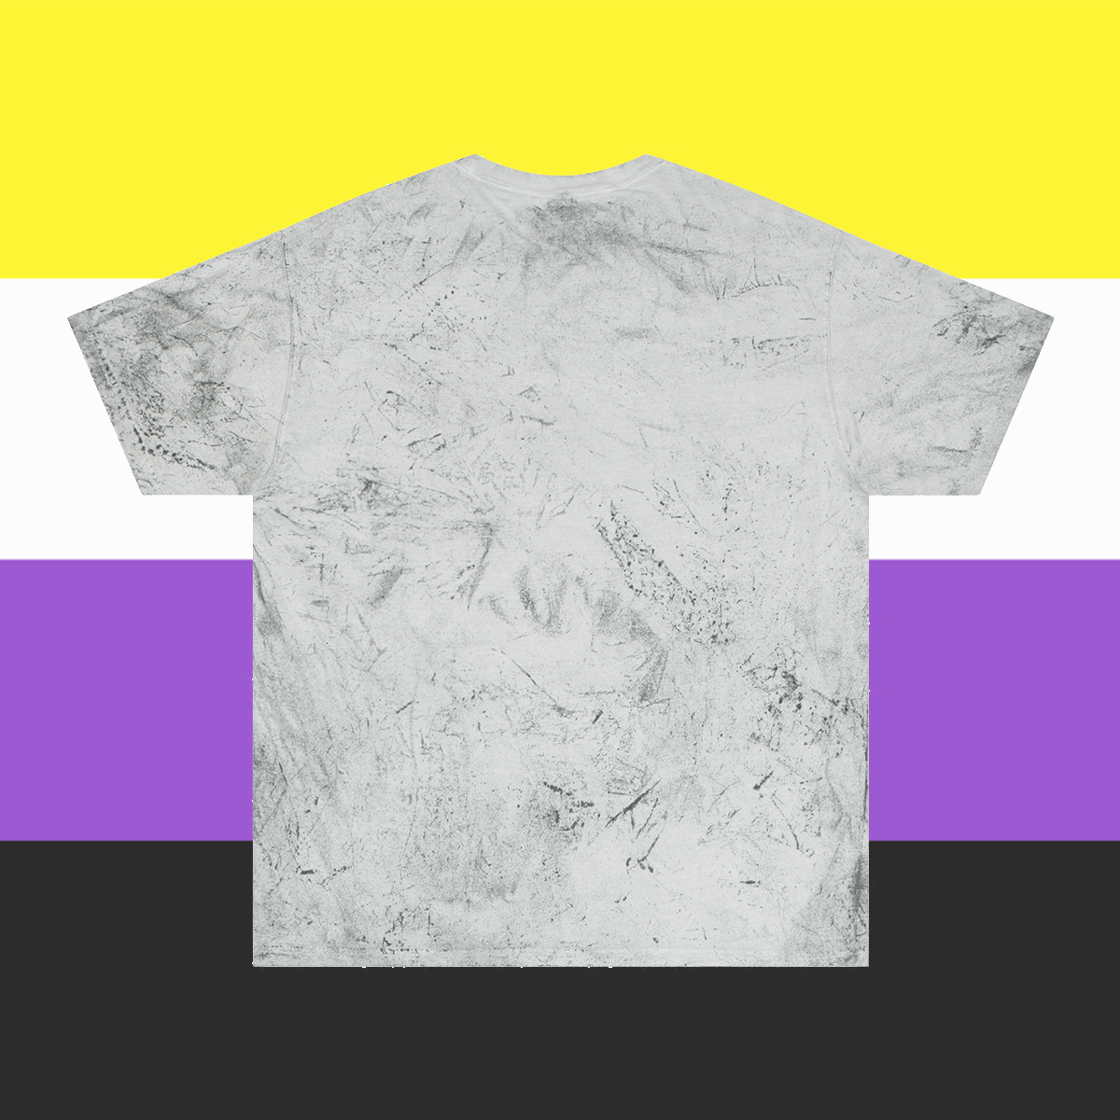 Image of PRIDE 2022 | Skatune Logo | Non-Binary Pride Flag Colors | Dark Mineral Wash Comfort Colors Shirt